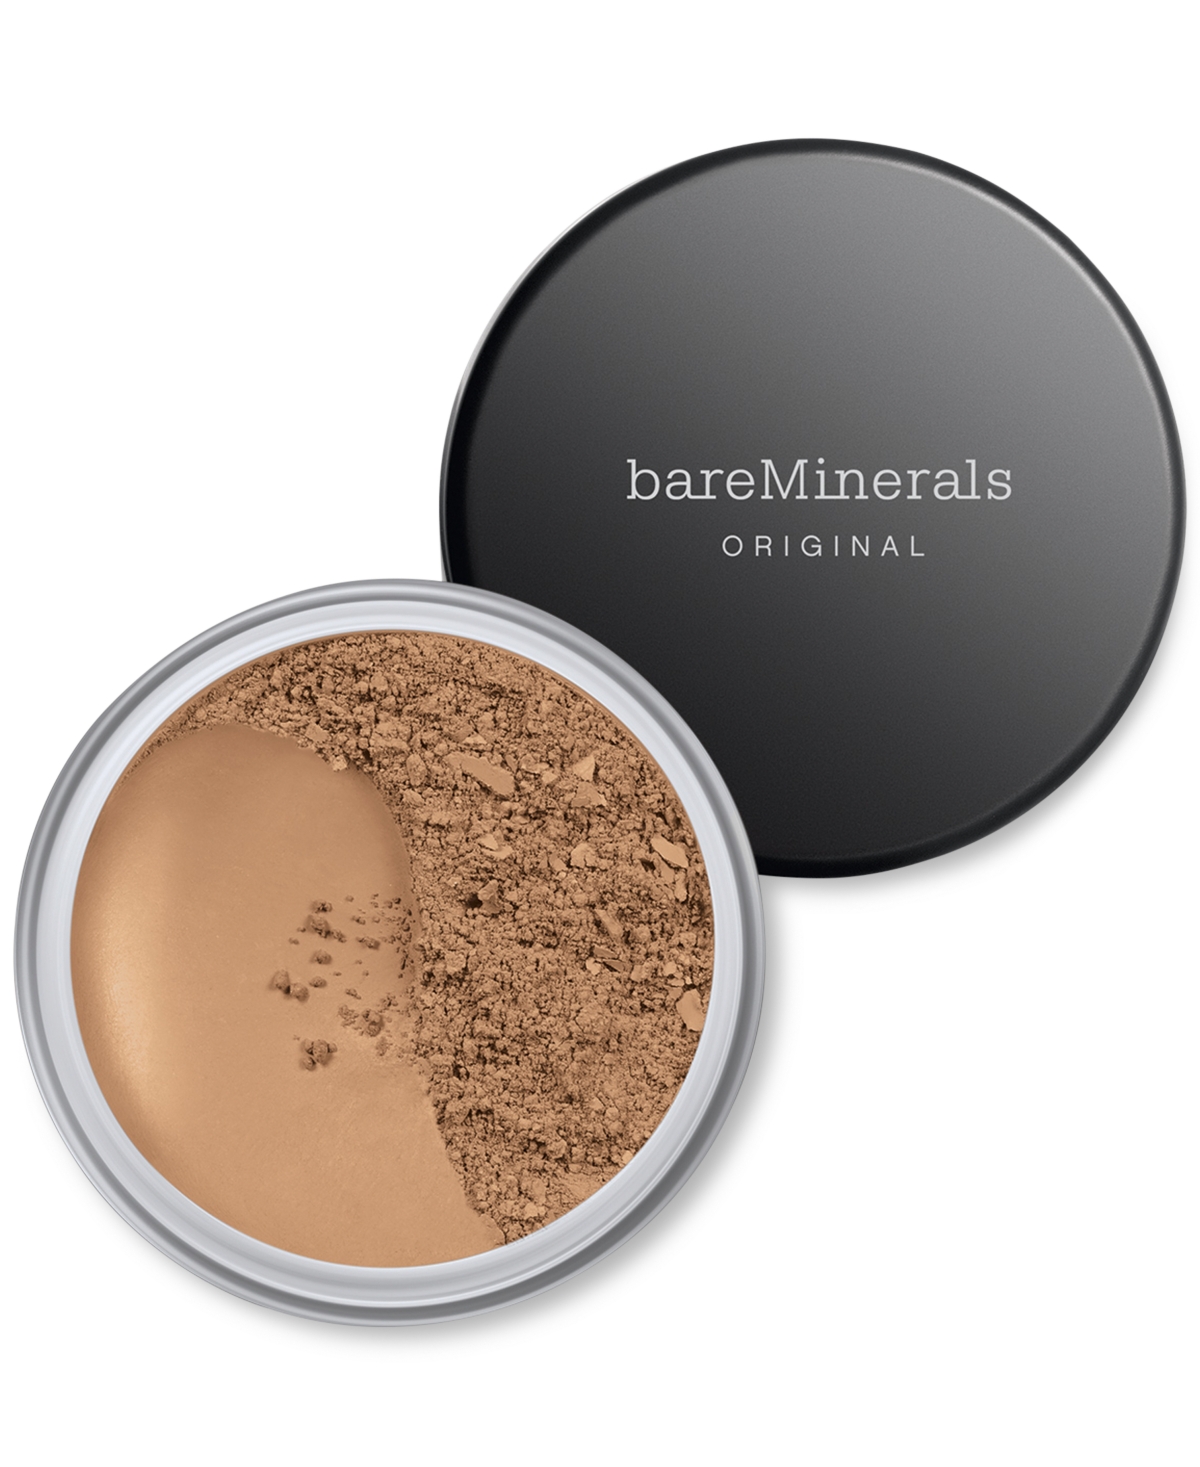 Bareminerals Original Loose Powder Foundation Spf 15 In Tan  - For Tan Skin With Cool Undertones